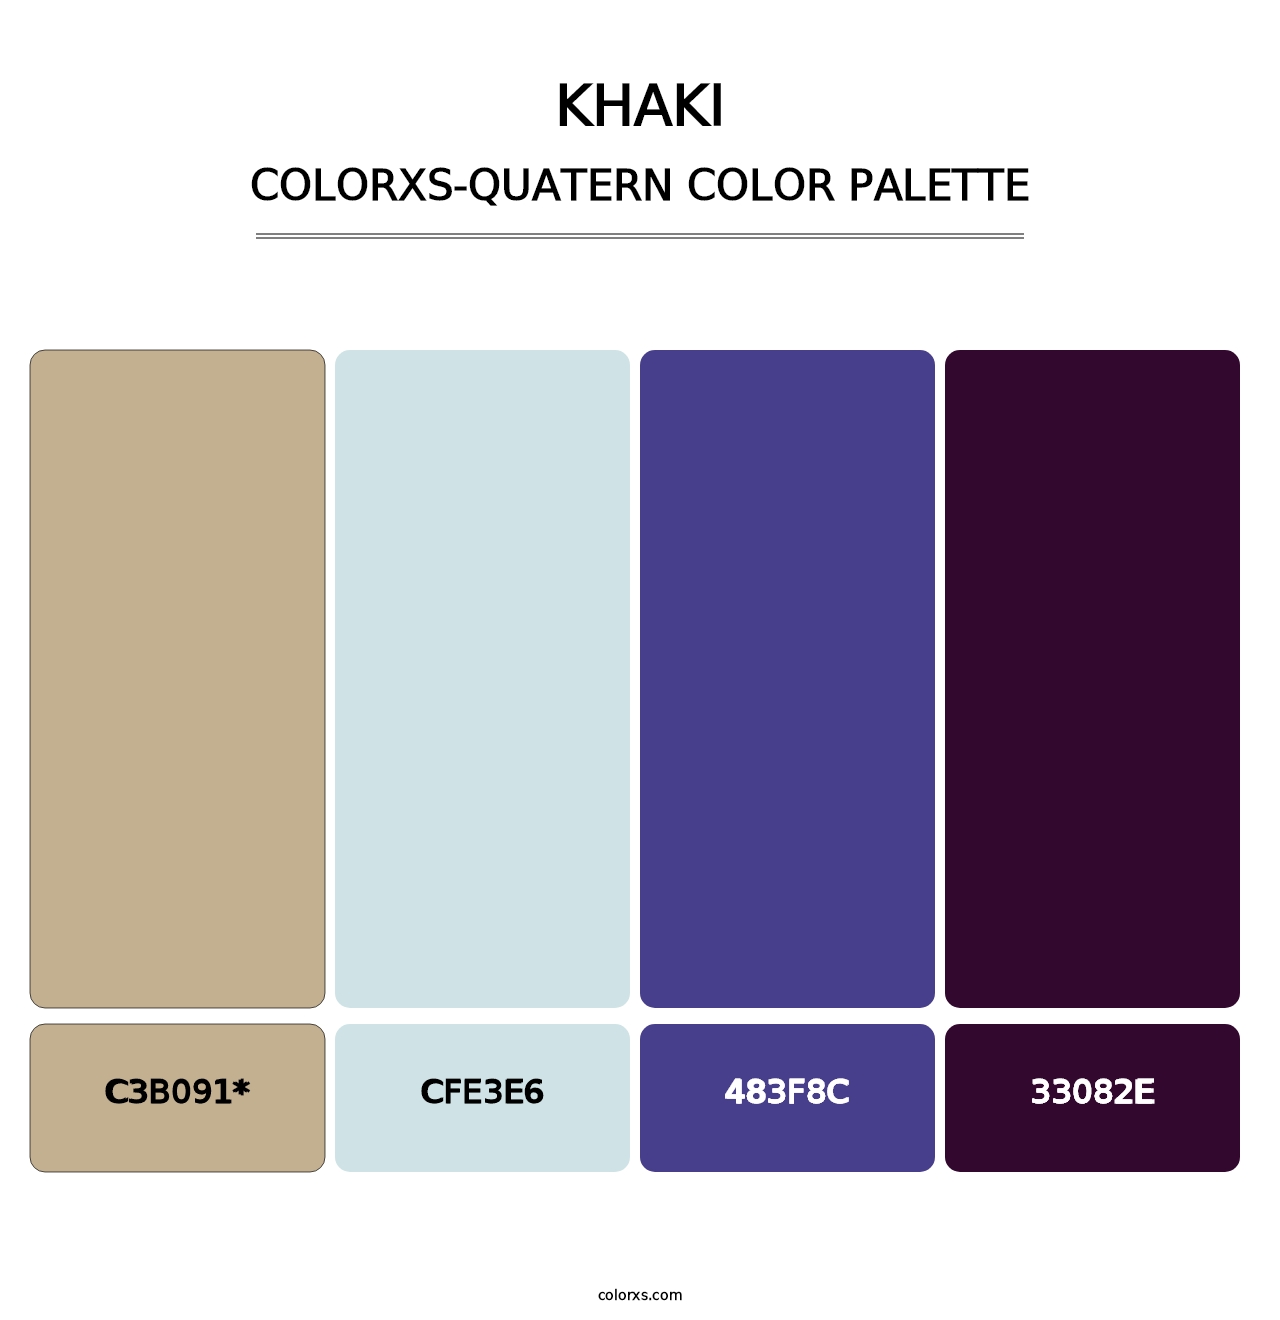 Khaki - Colorxs Quatern Palette